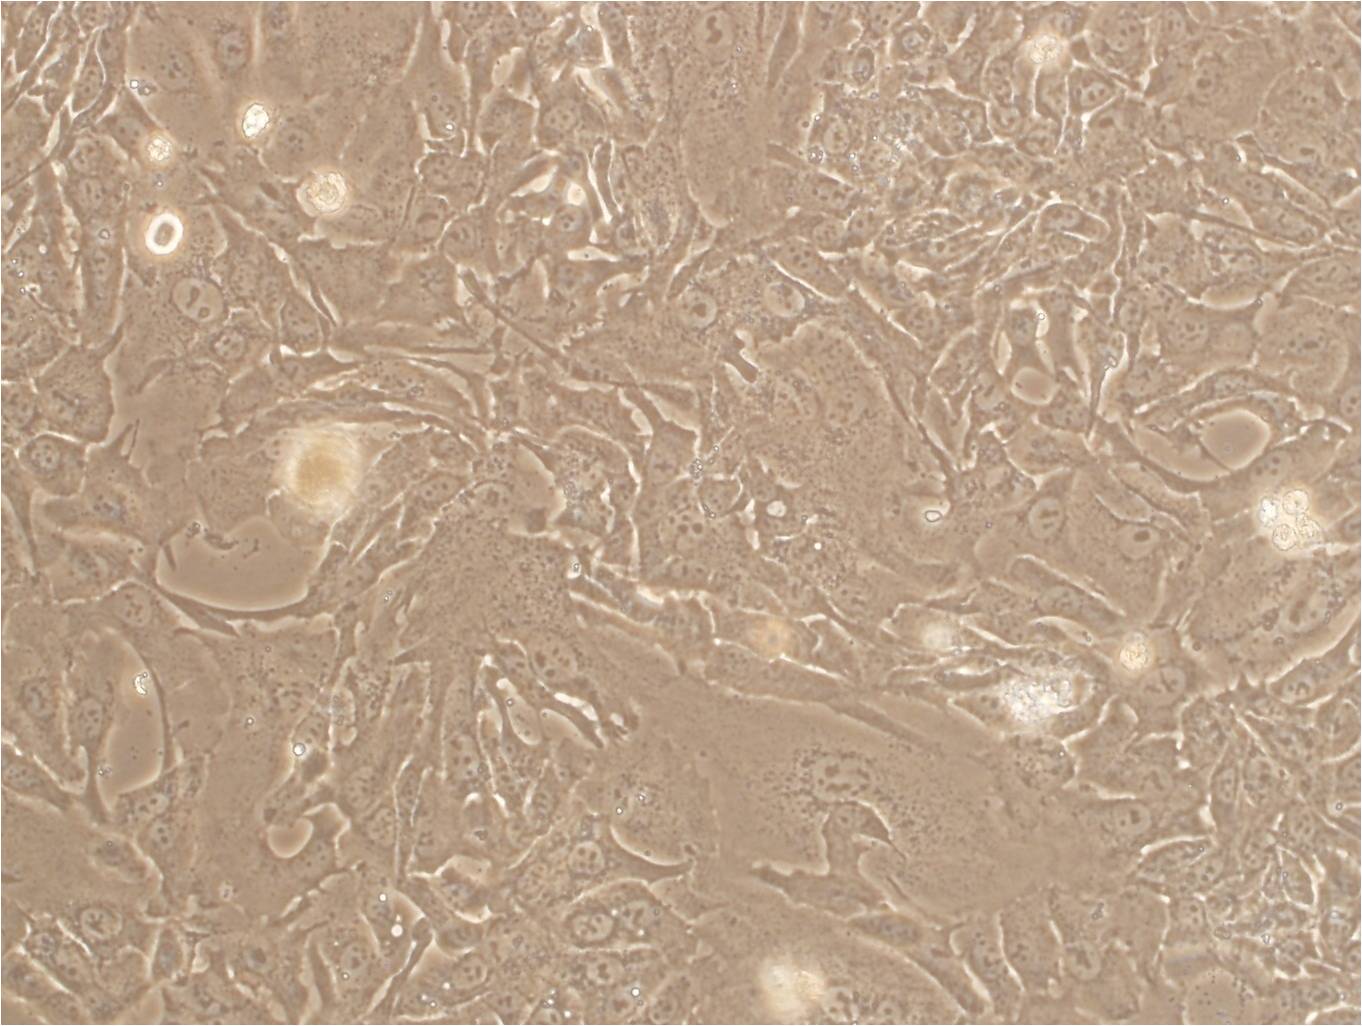 NCI-H1975 Cells(赠送Str鉴定报告)|人肺腺癌细胞,NCI-H1975 Cells